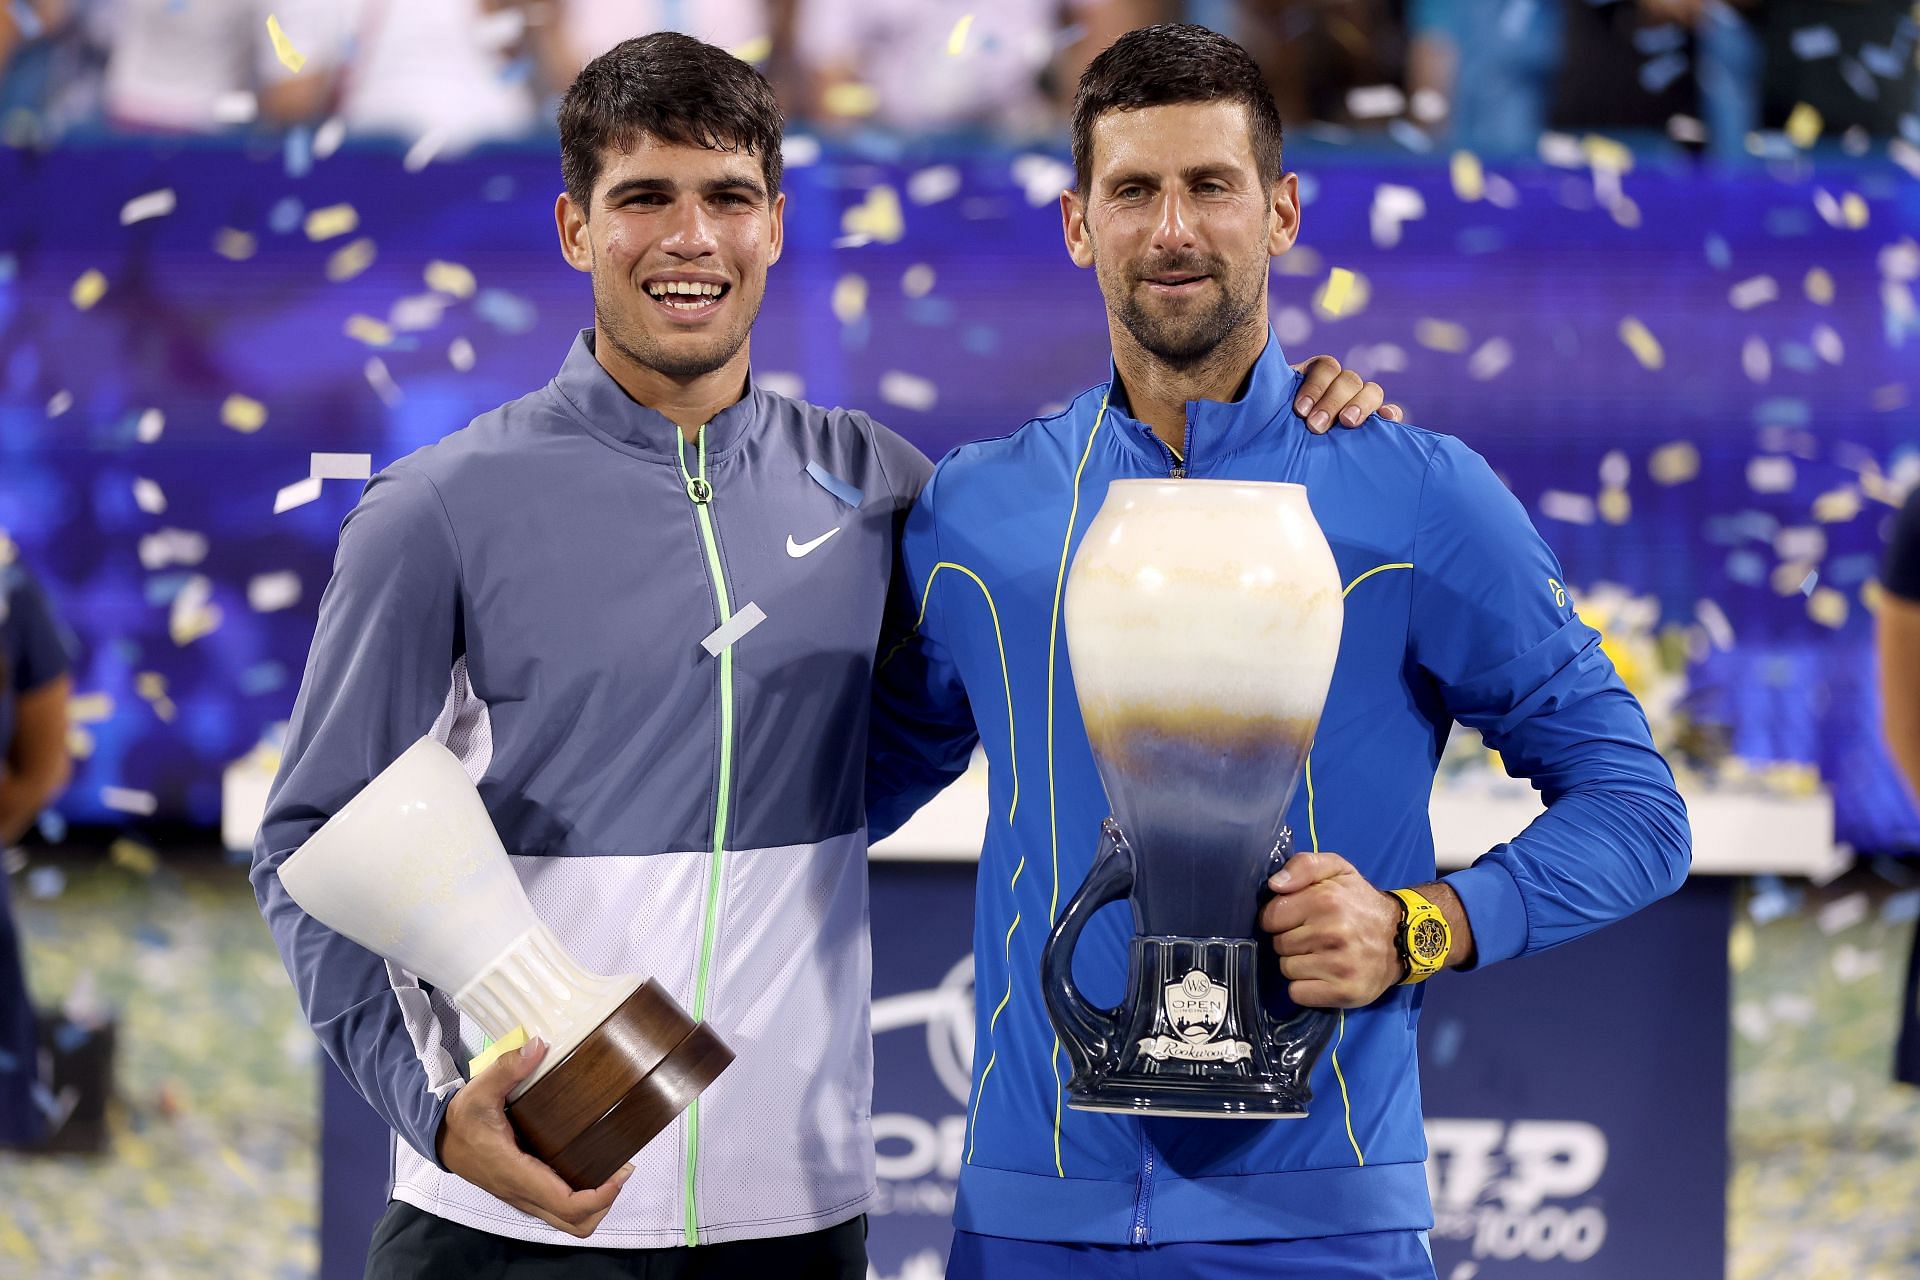 Novak Djokovic vs Carlos Alcaraz exhibition match: Where to Watch, live streaming details & more